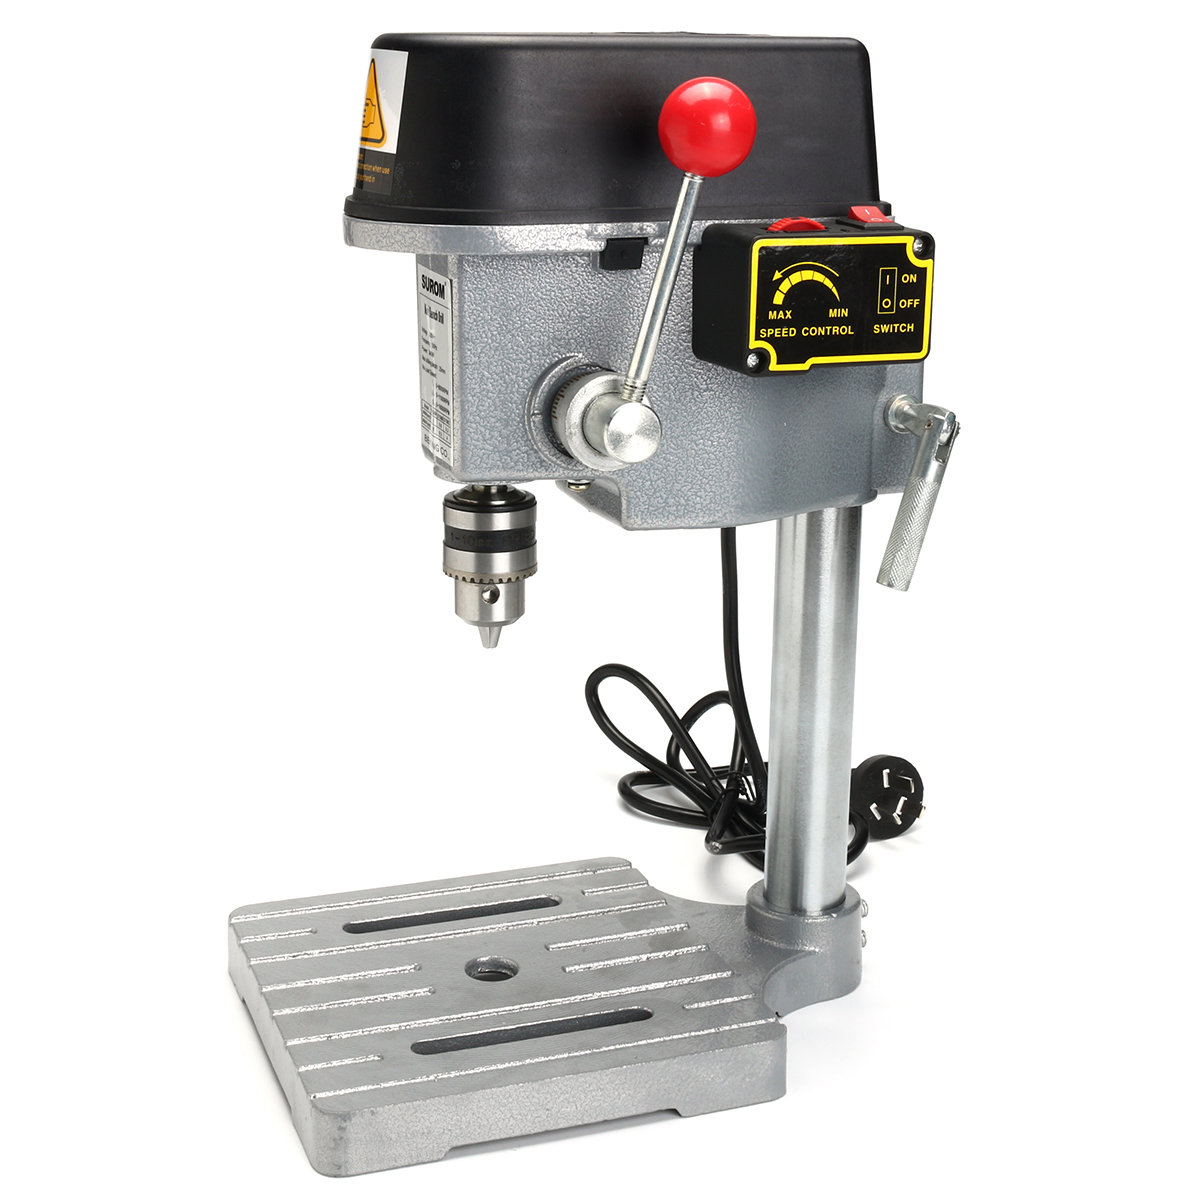 

Raitool™ 340W Mini Benchtop Drill Press Compact Drill Wood Drilling Machine Bench Tool 1-10mm